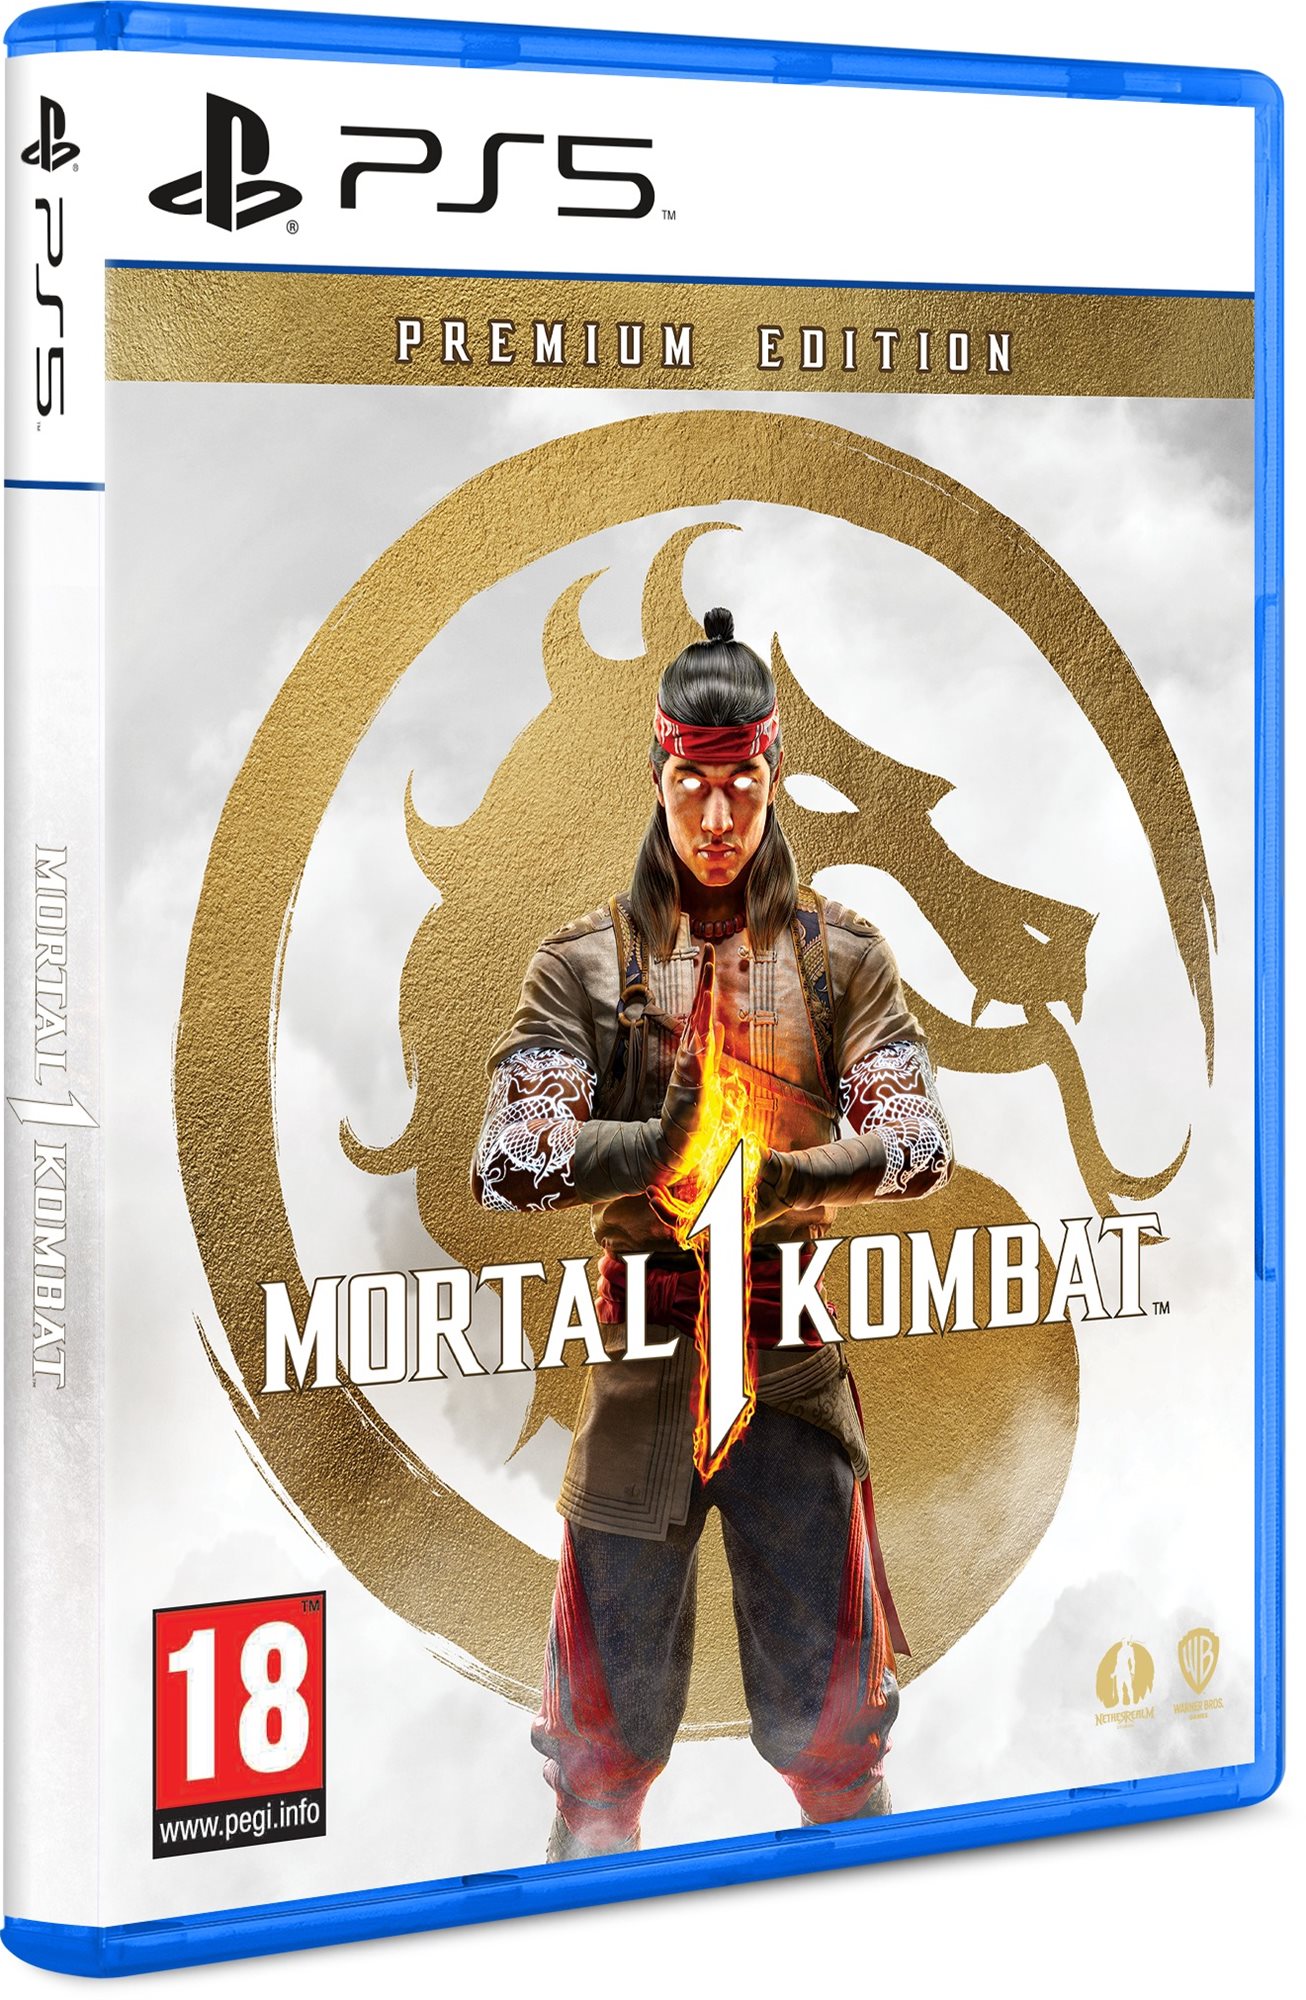 Mortal Kombat 1: Premium Edition - PS5